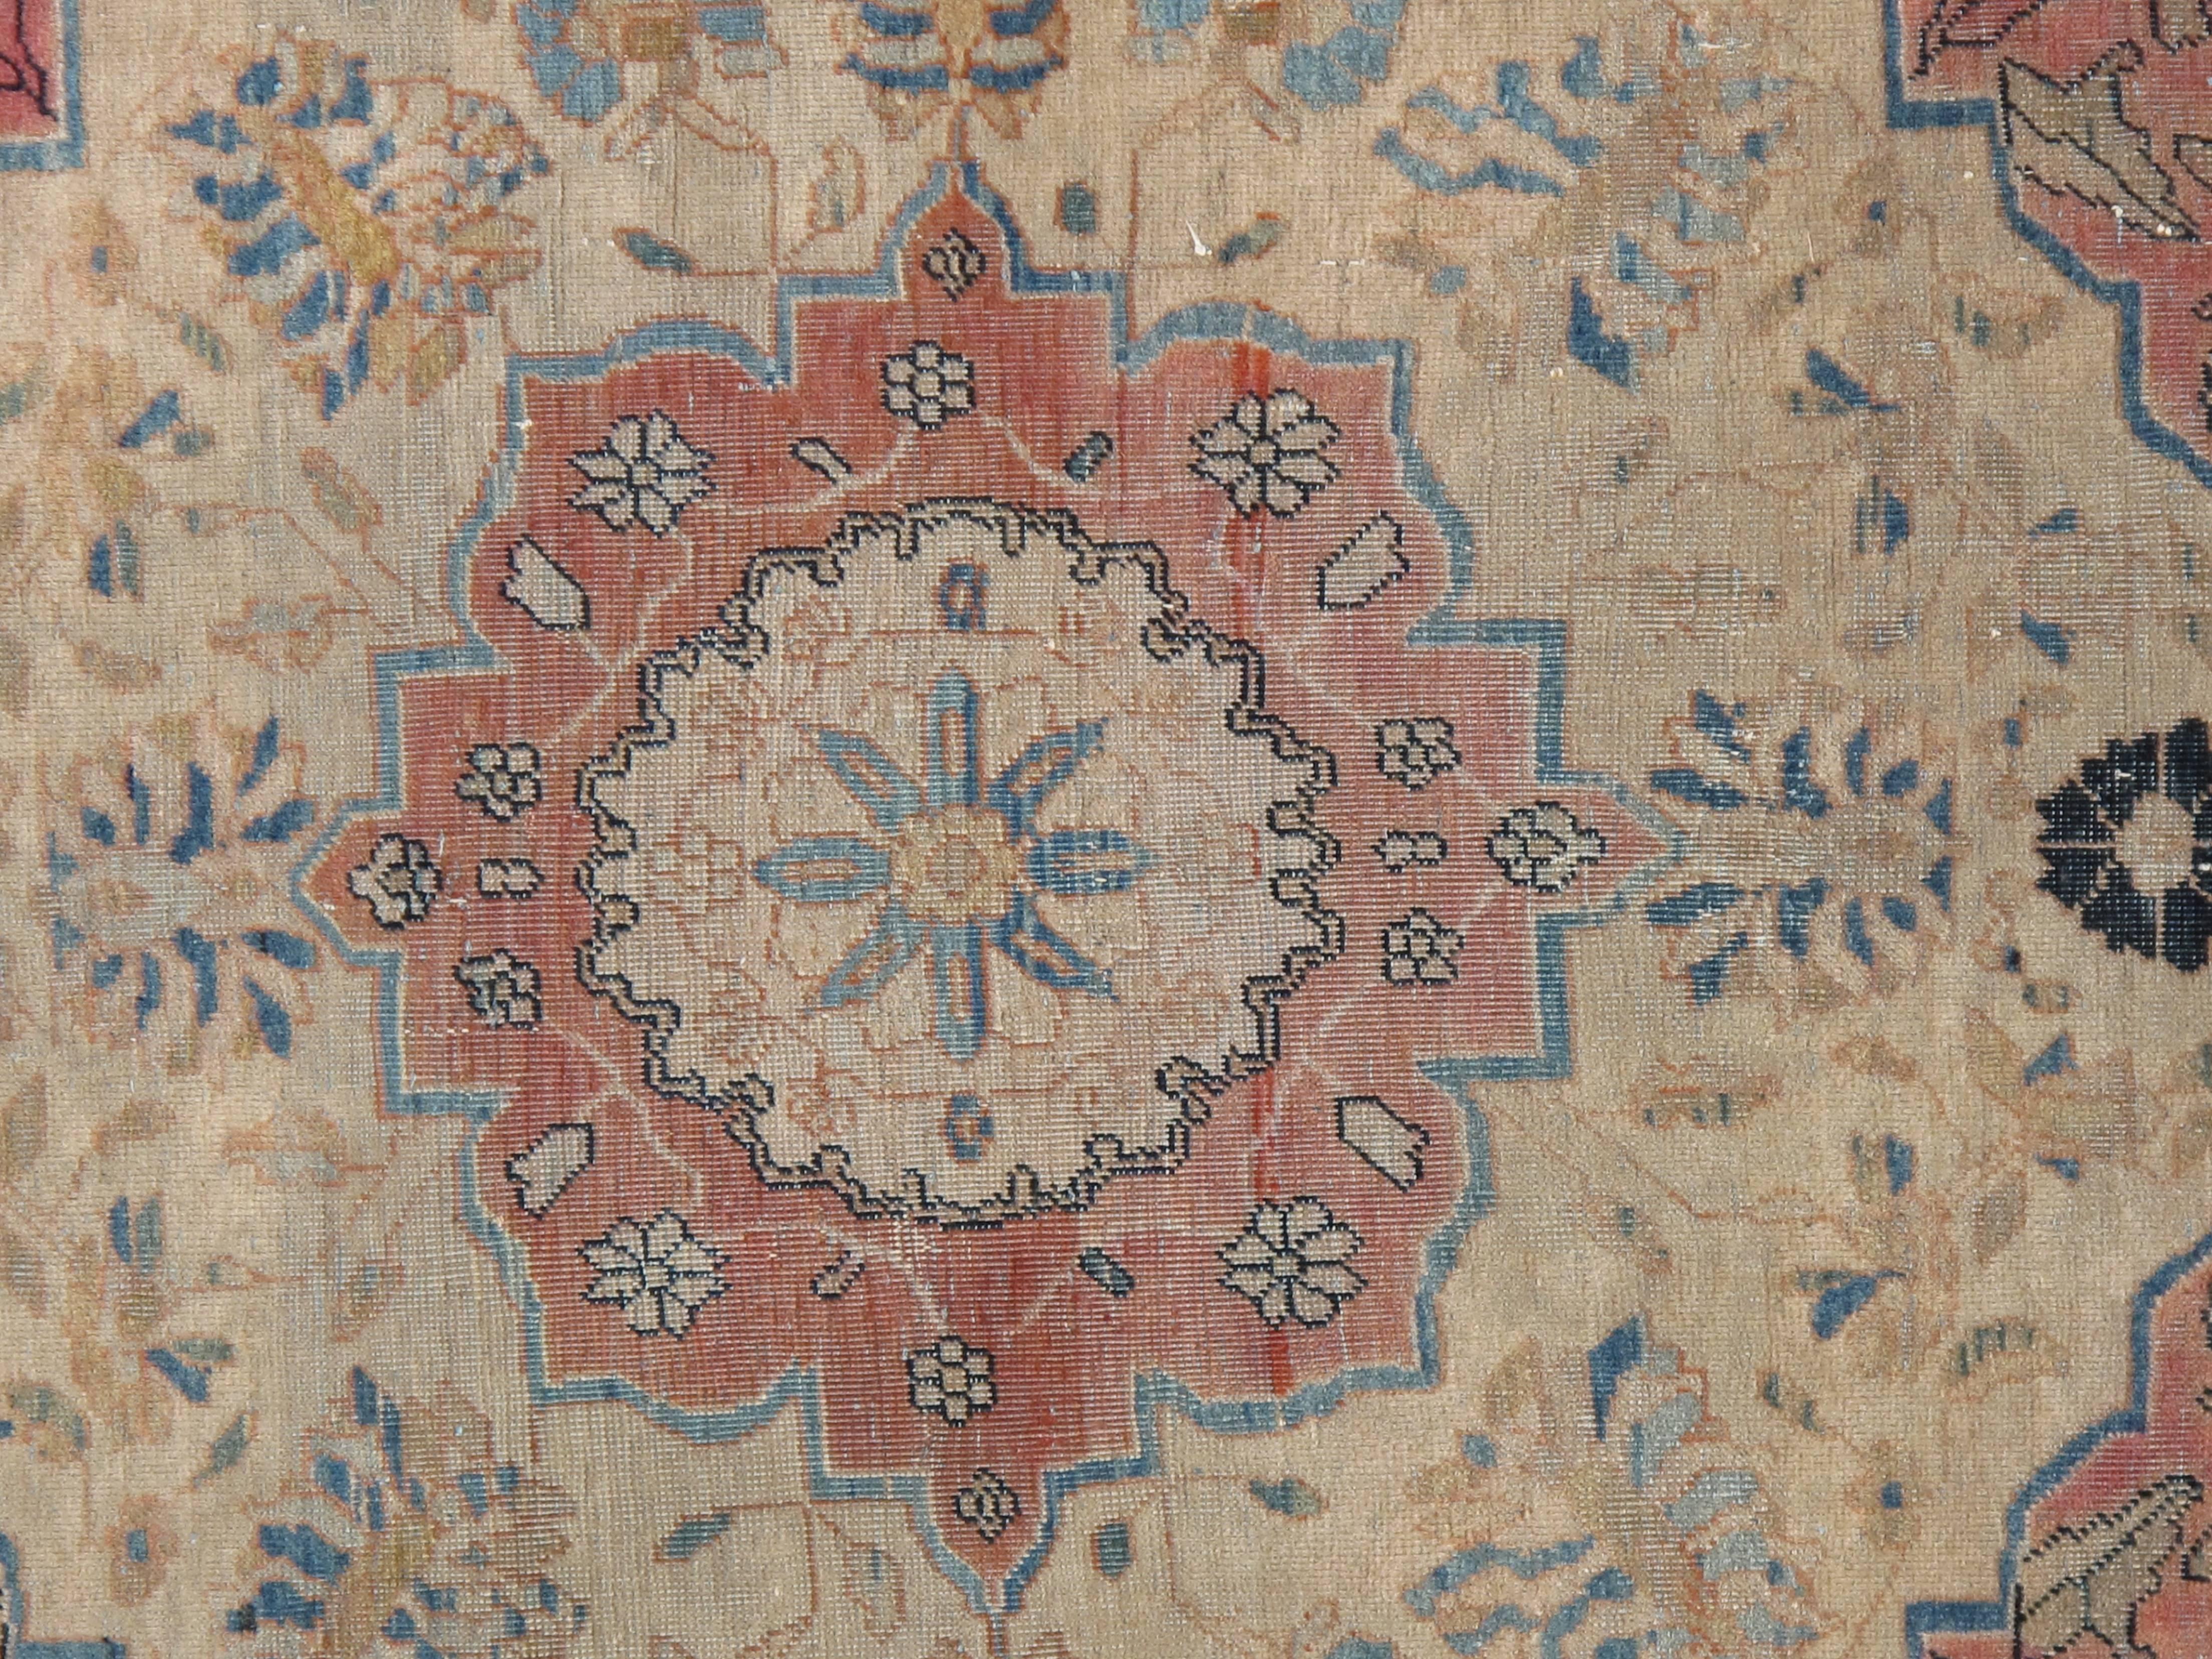 Hand-Knotted Antique Persian Mohtasham Kashan Rug, Handmade Rug, Red, Navy, Light Blue